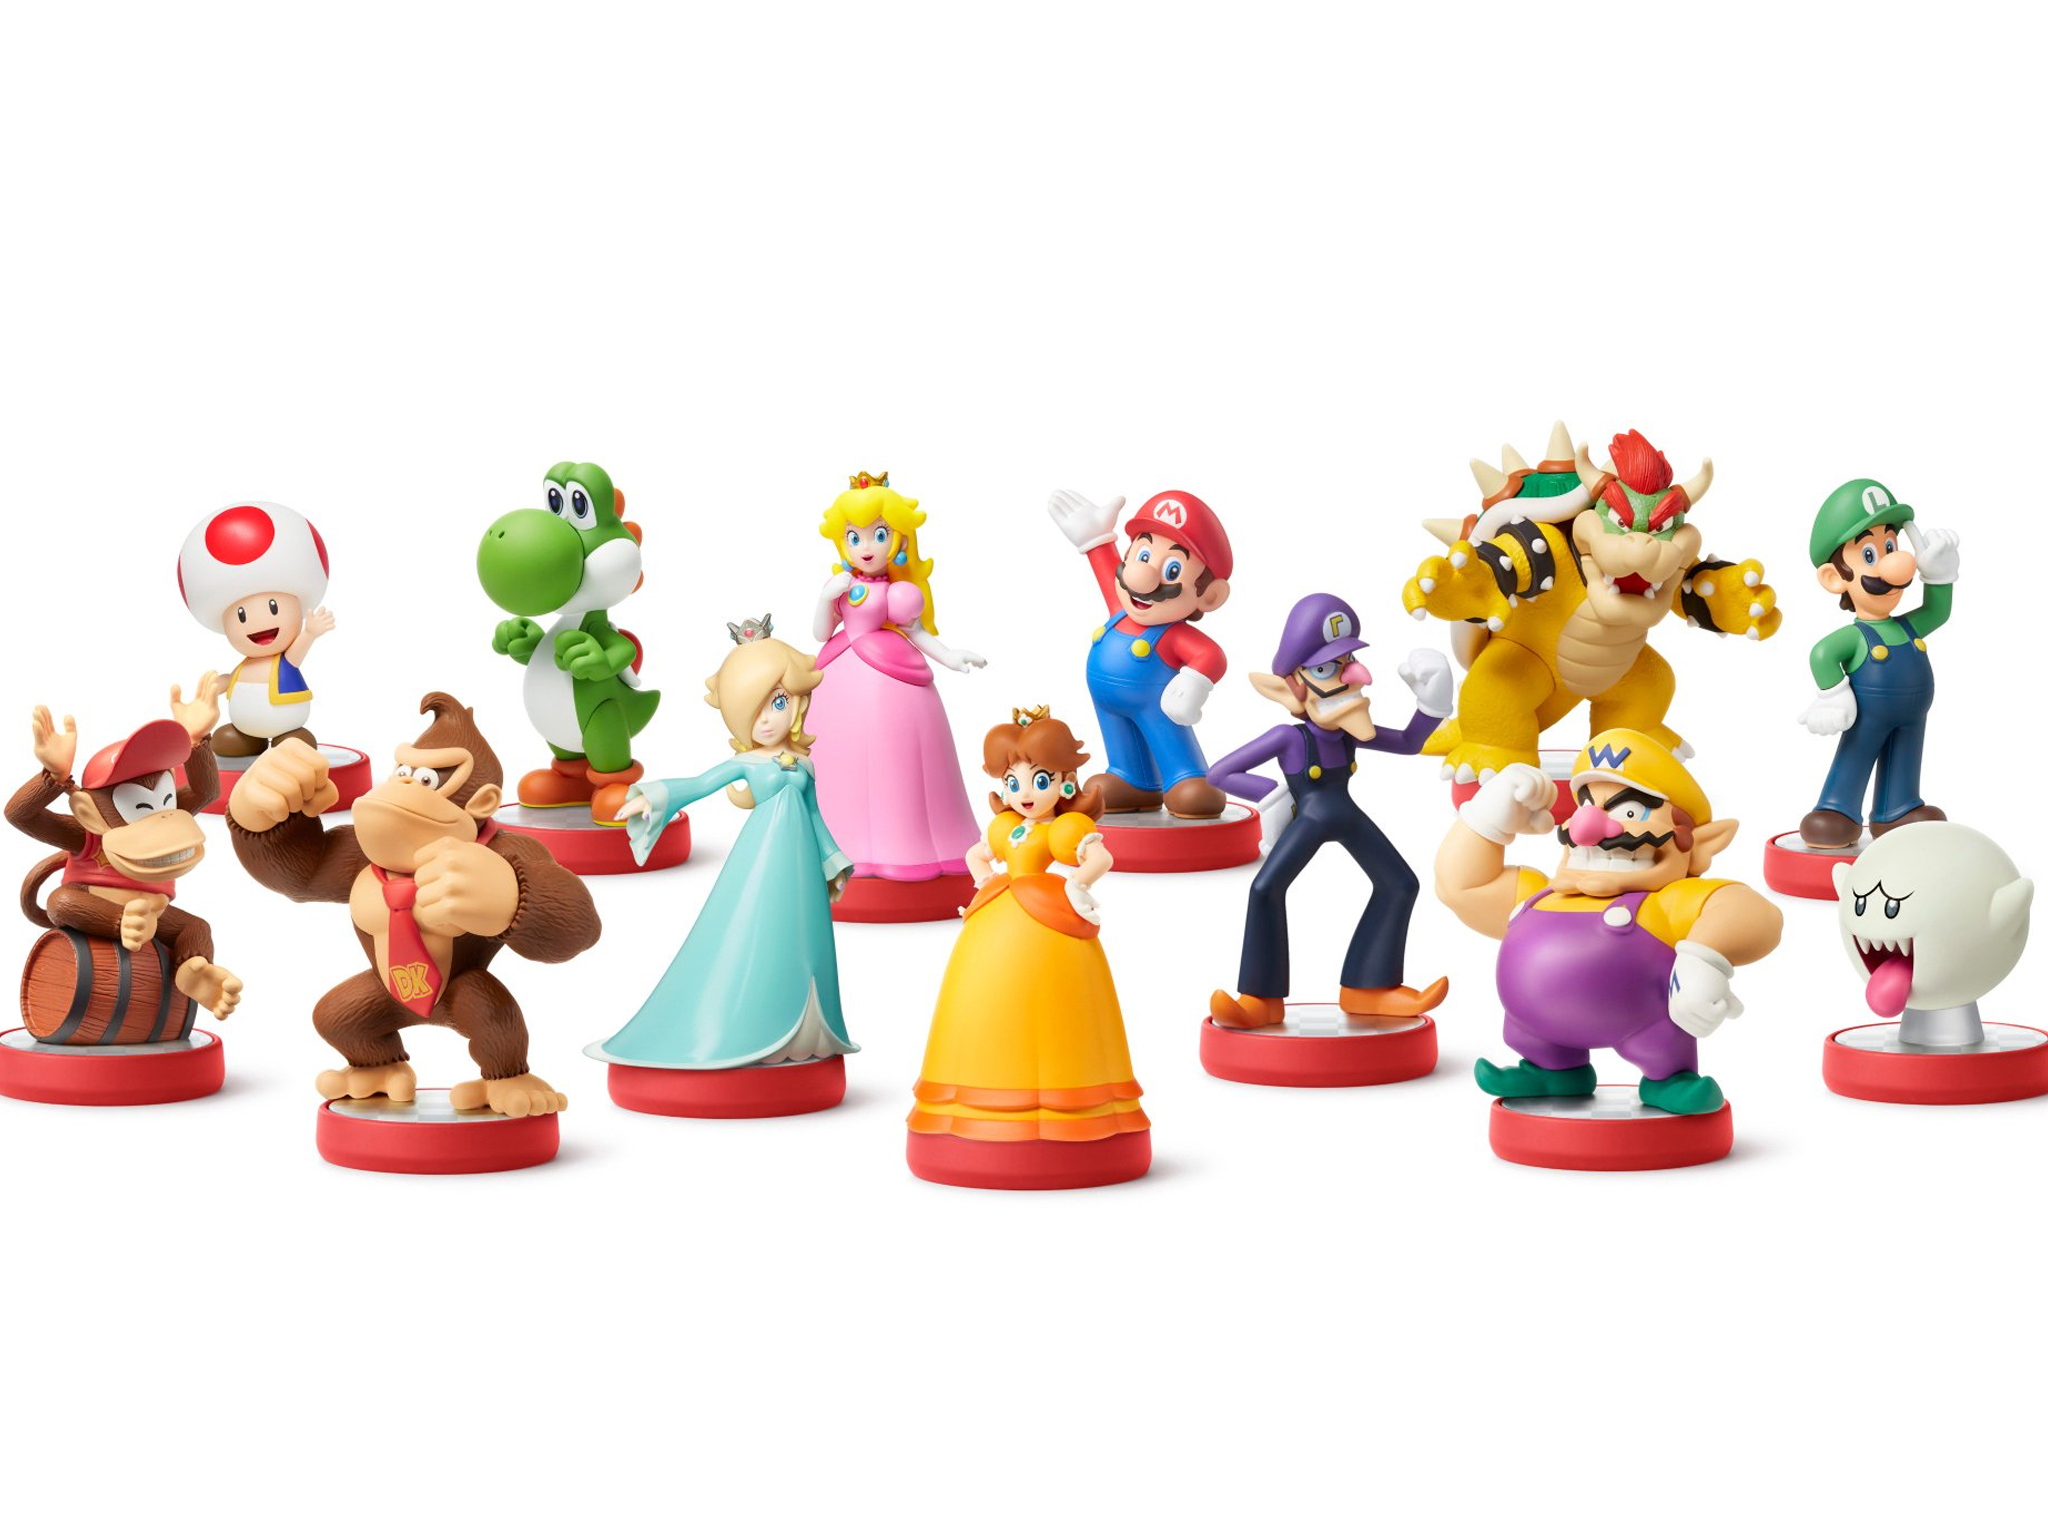 Nintendo amiibo. Amiibo Марио. Фигурки amiibo для Nintendo Switch. Mario (super Mario коллекция) [Nintendo amiibo character]. Амибо фигурки супер Марио.